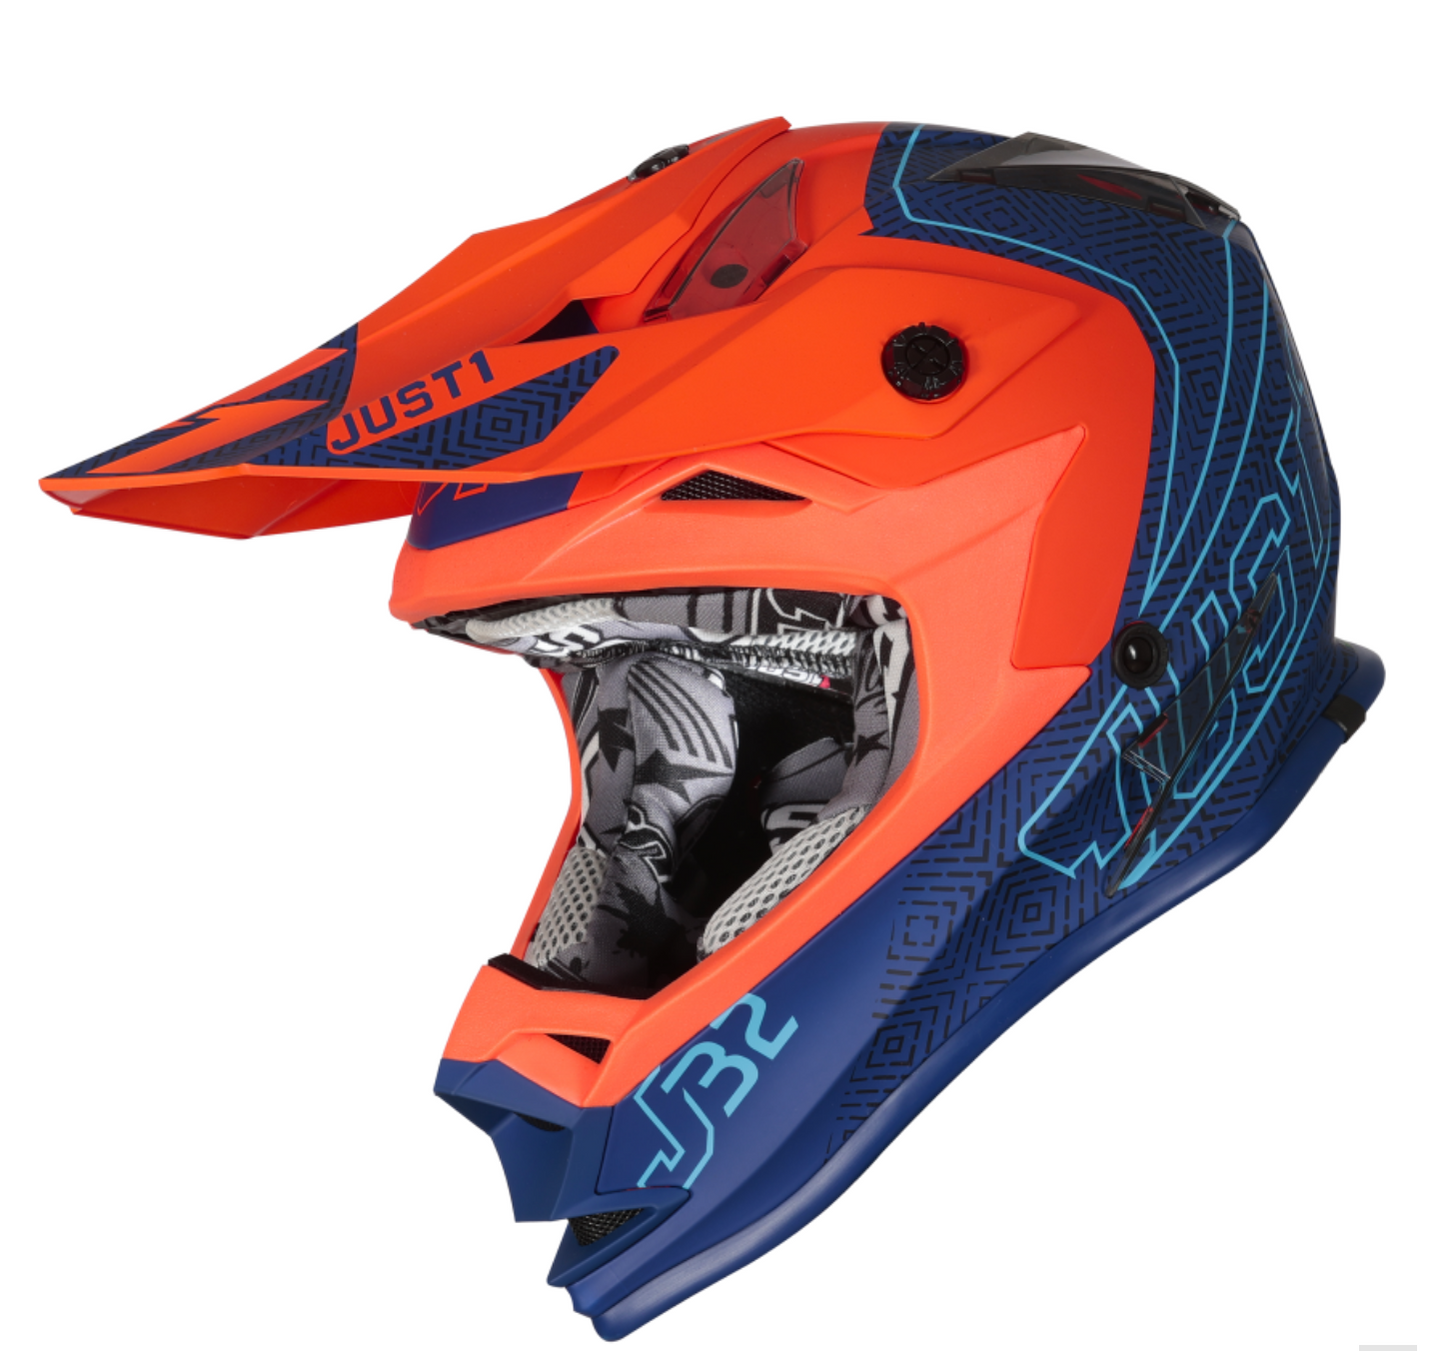 Just 1 Youth Bundle - Youth Motocross Kit  - Orange Including Helmet